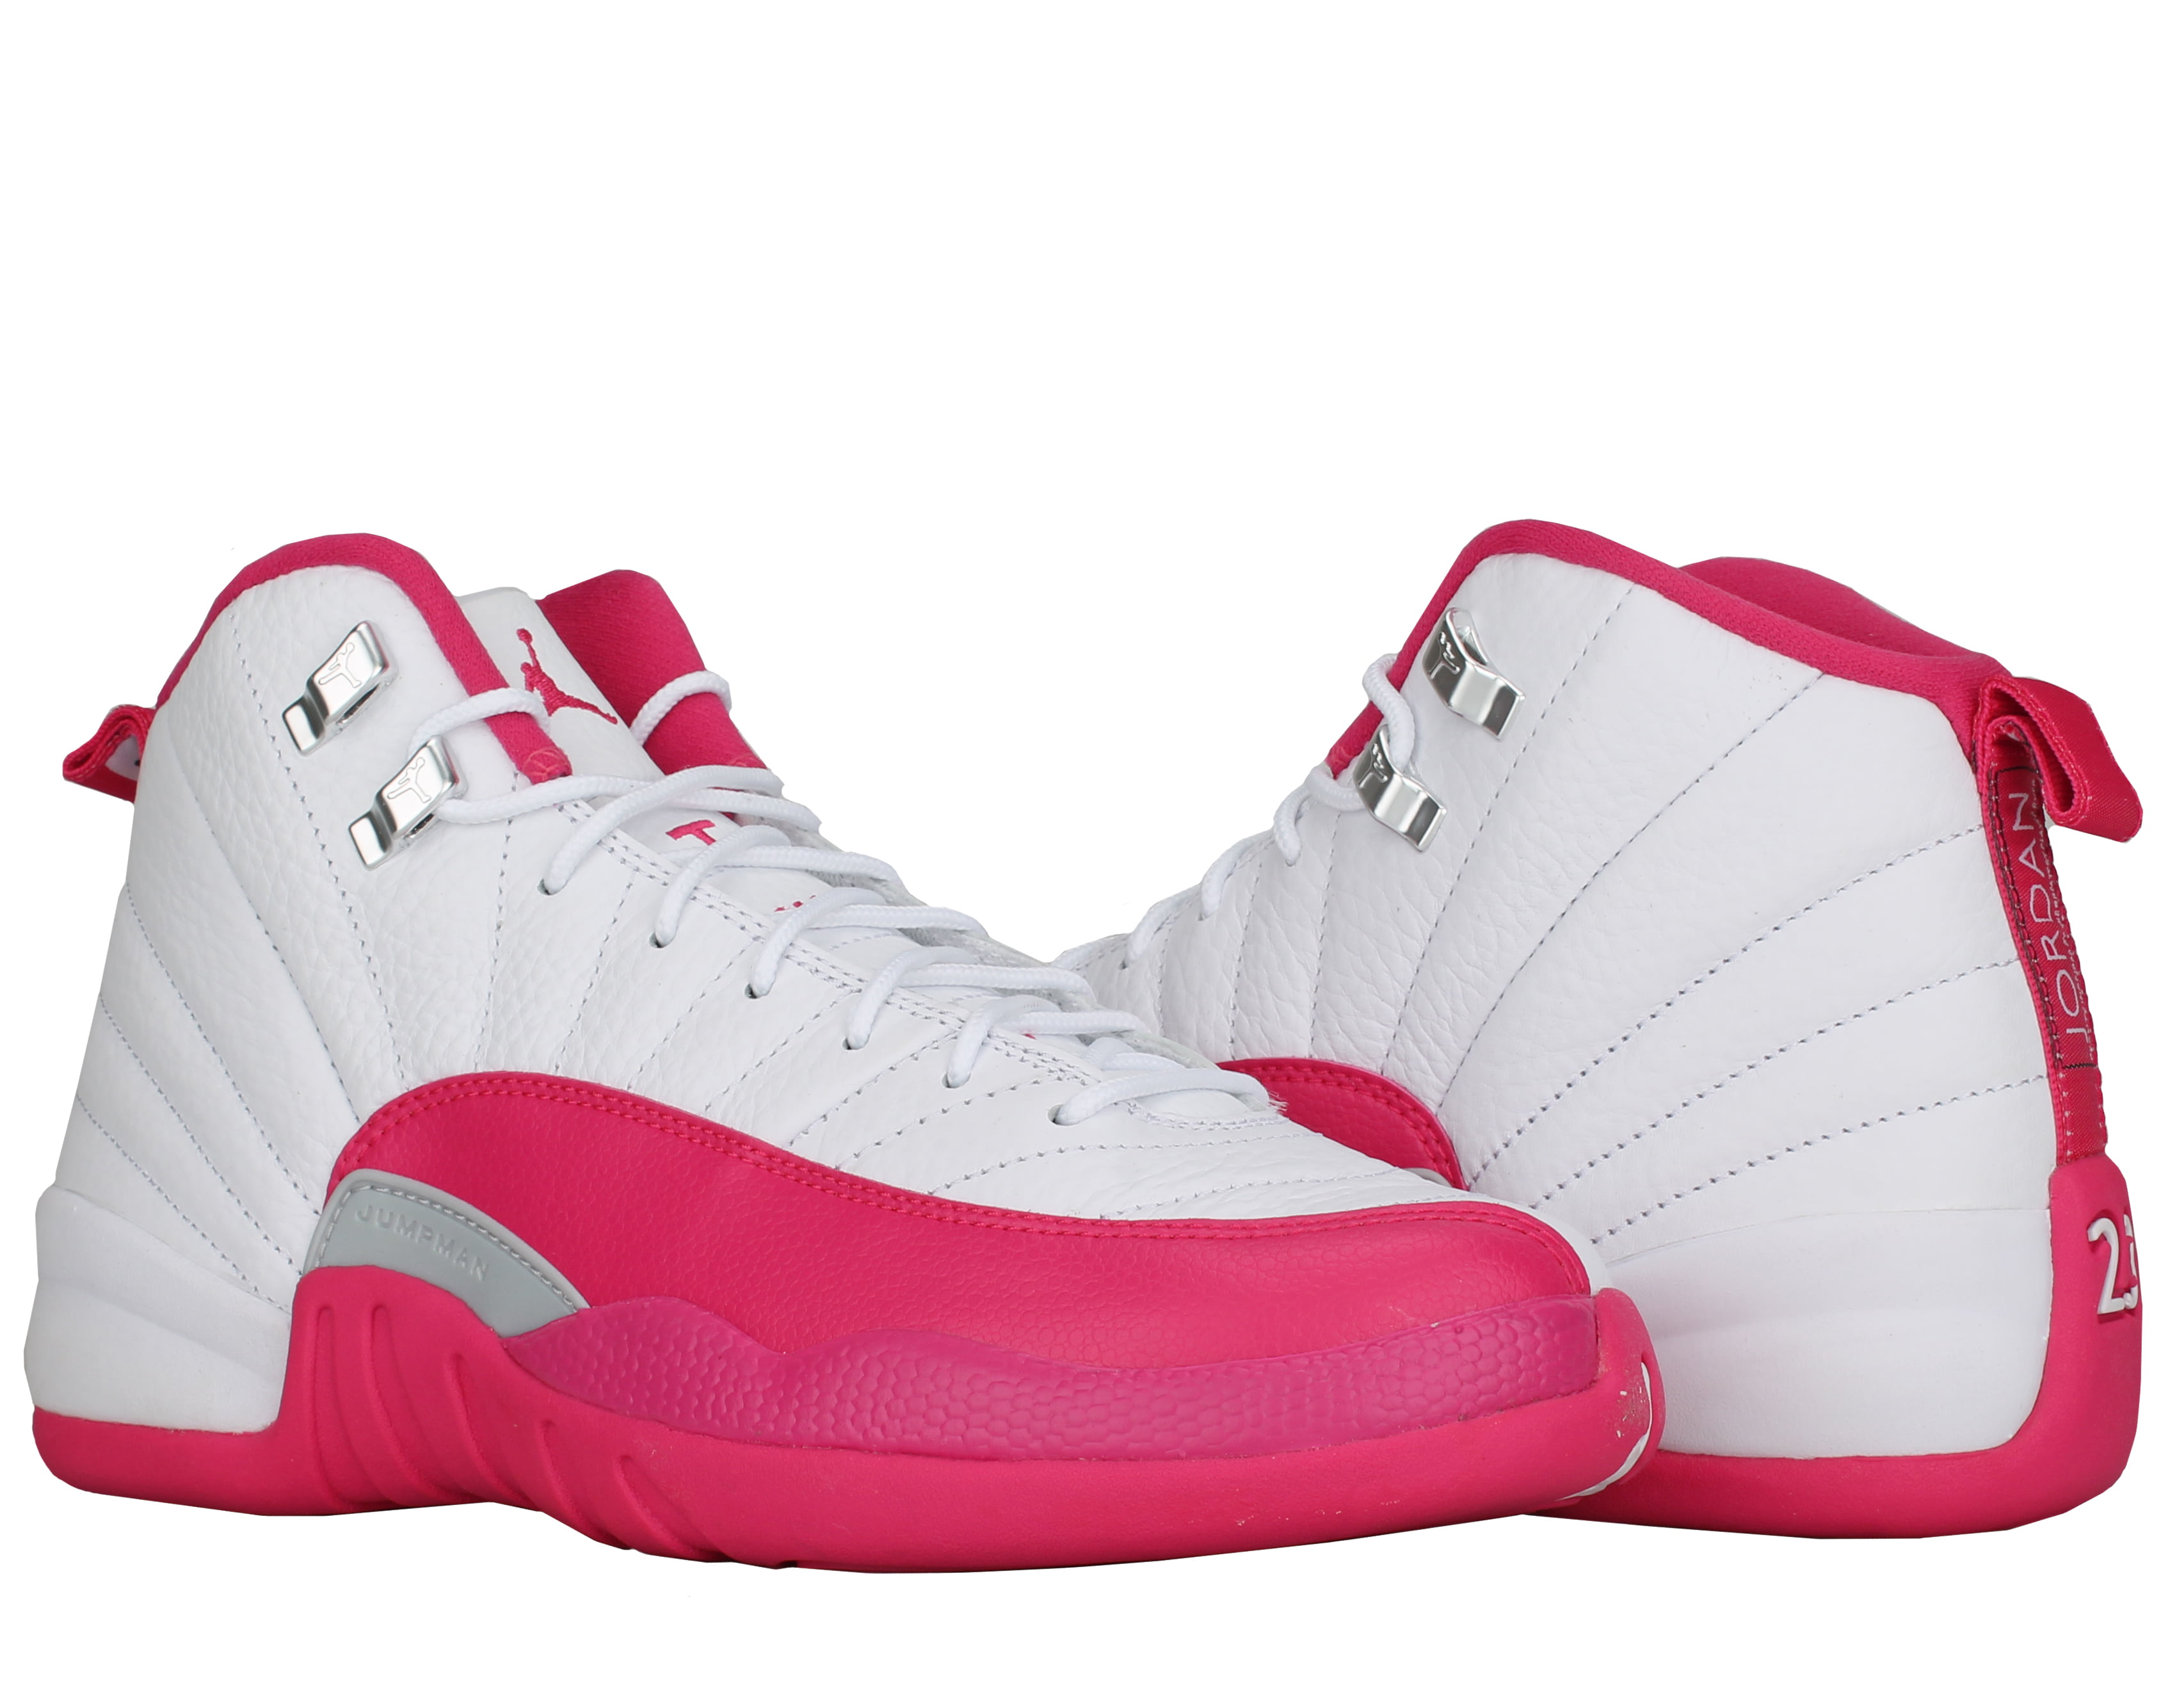 Nike Air Jordan 12 Retro GG Big Girls Basketball Shoes Size 8